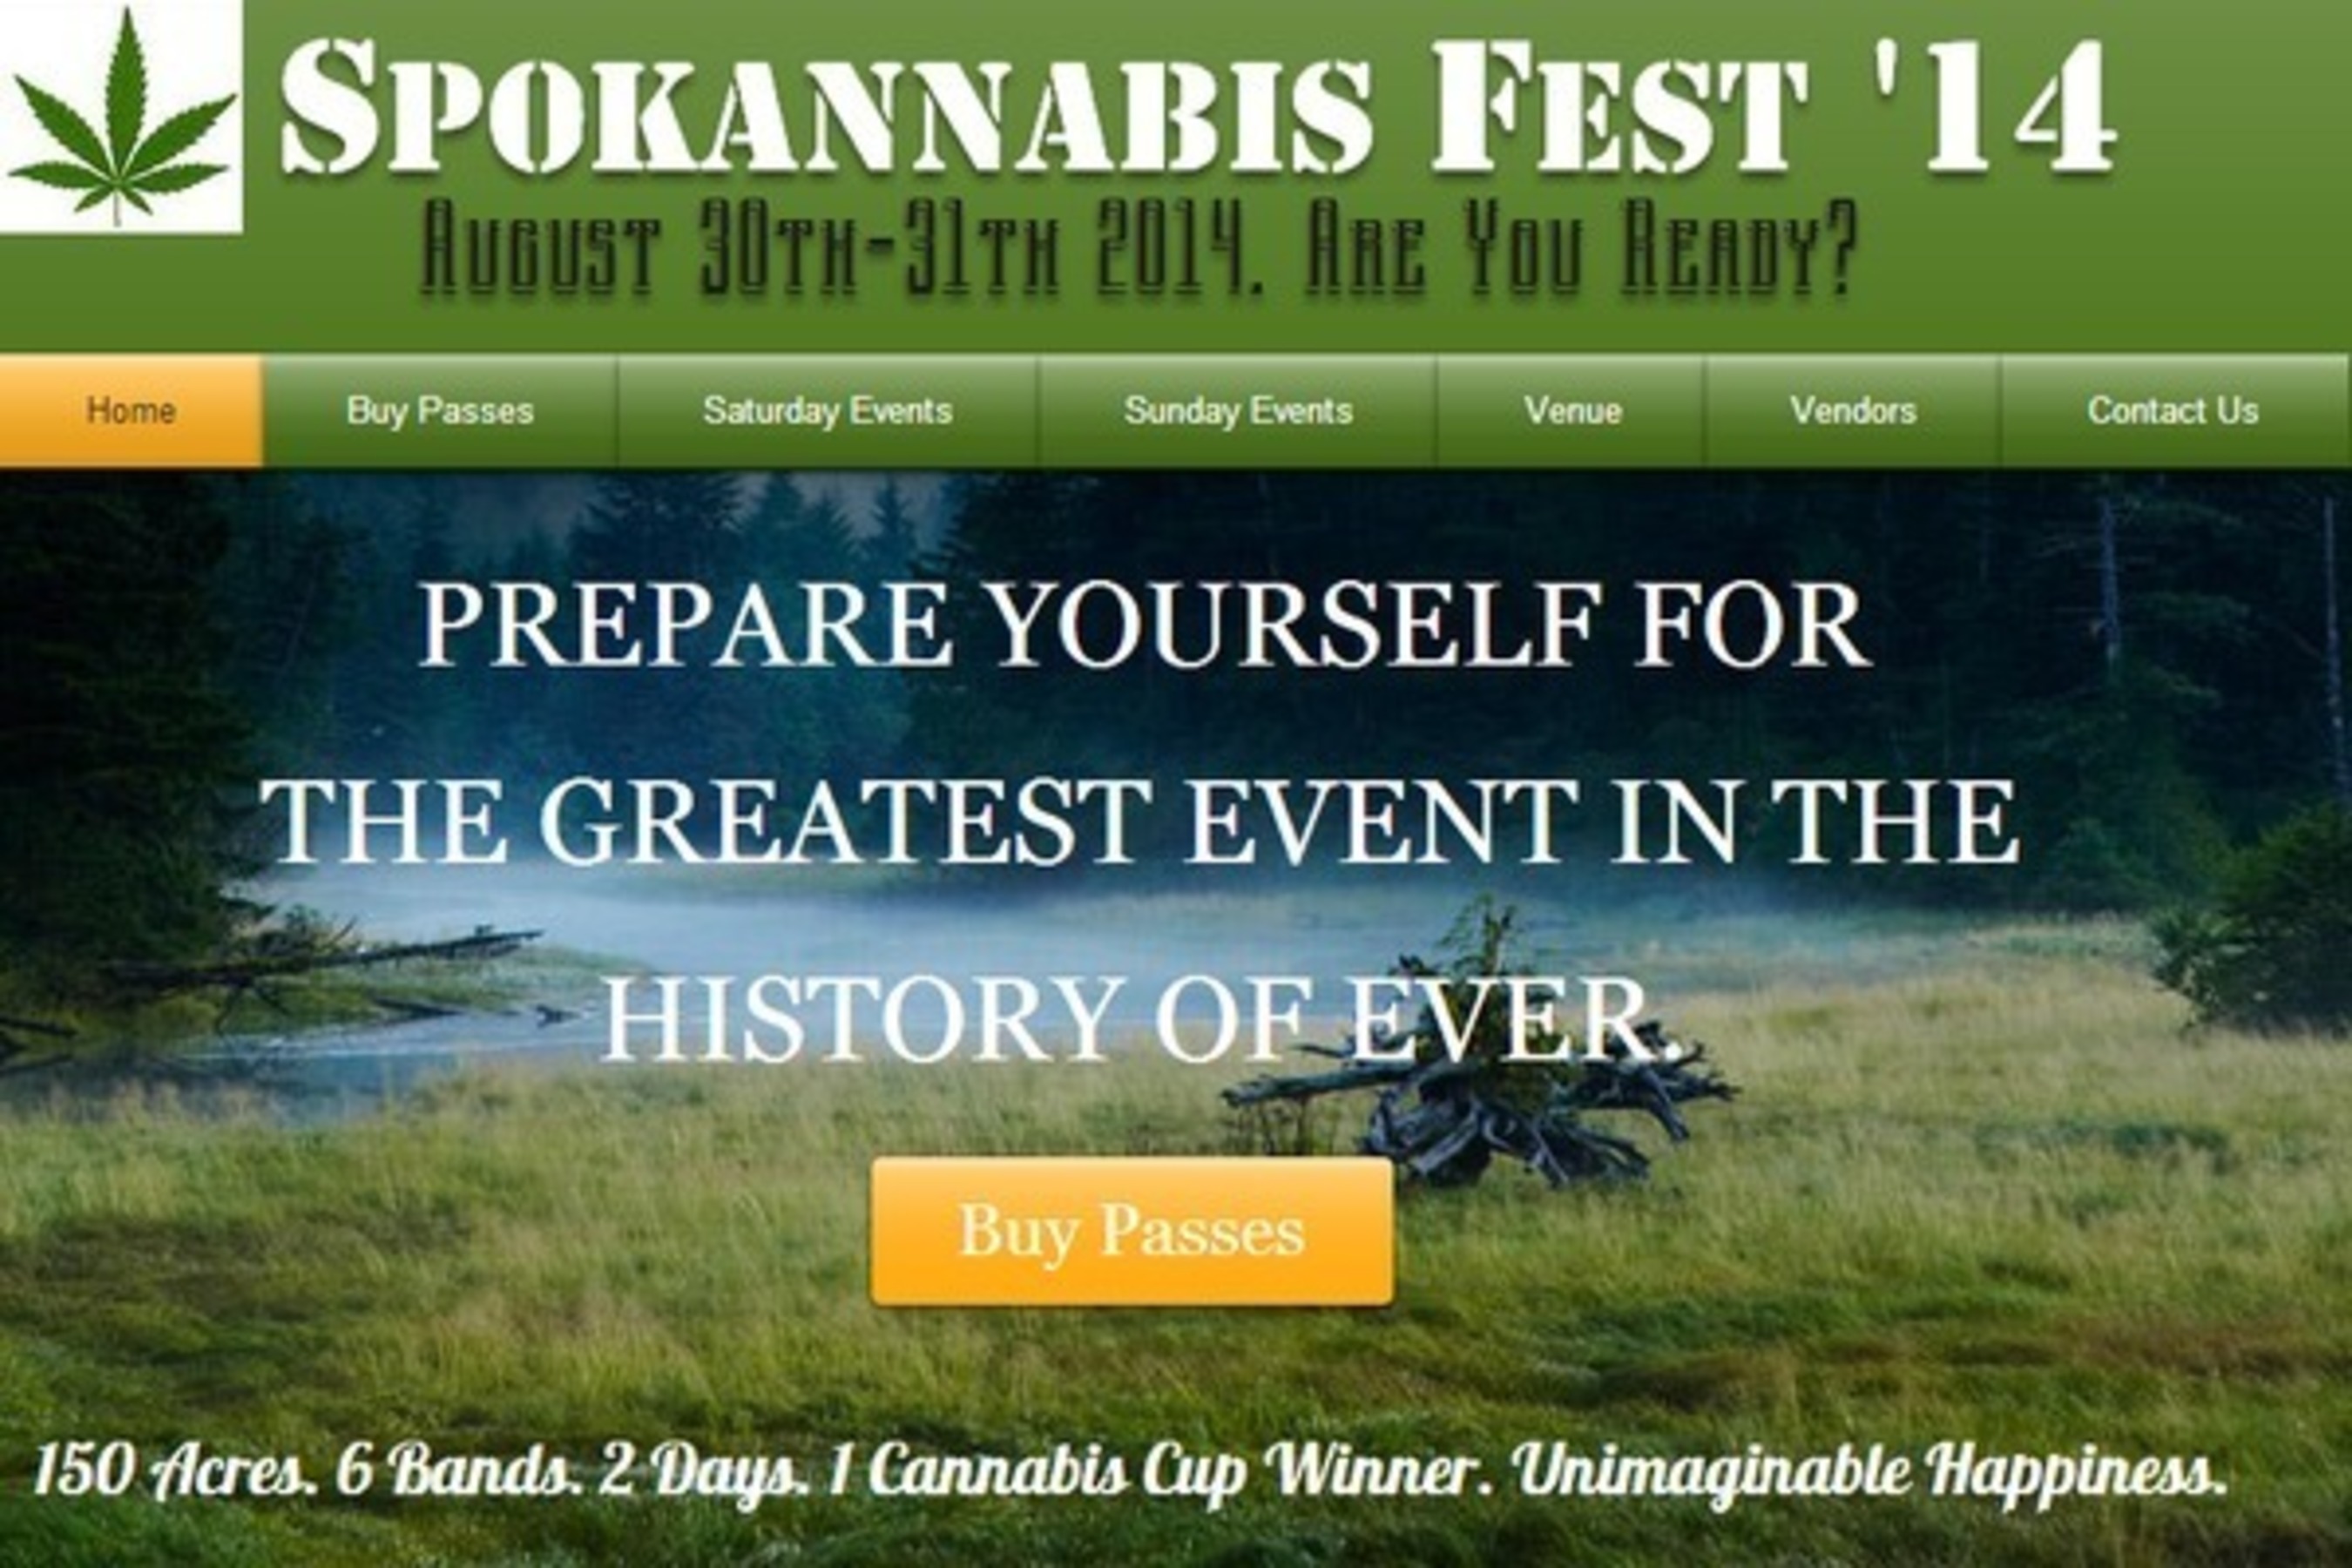 Spokannabis Fest ‘14 (PRNewsFoto/Spokannabis Fest)